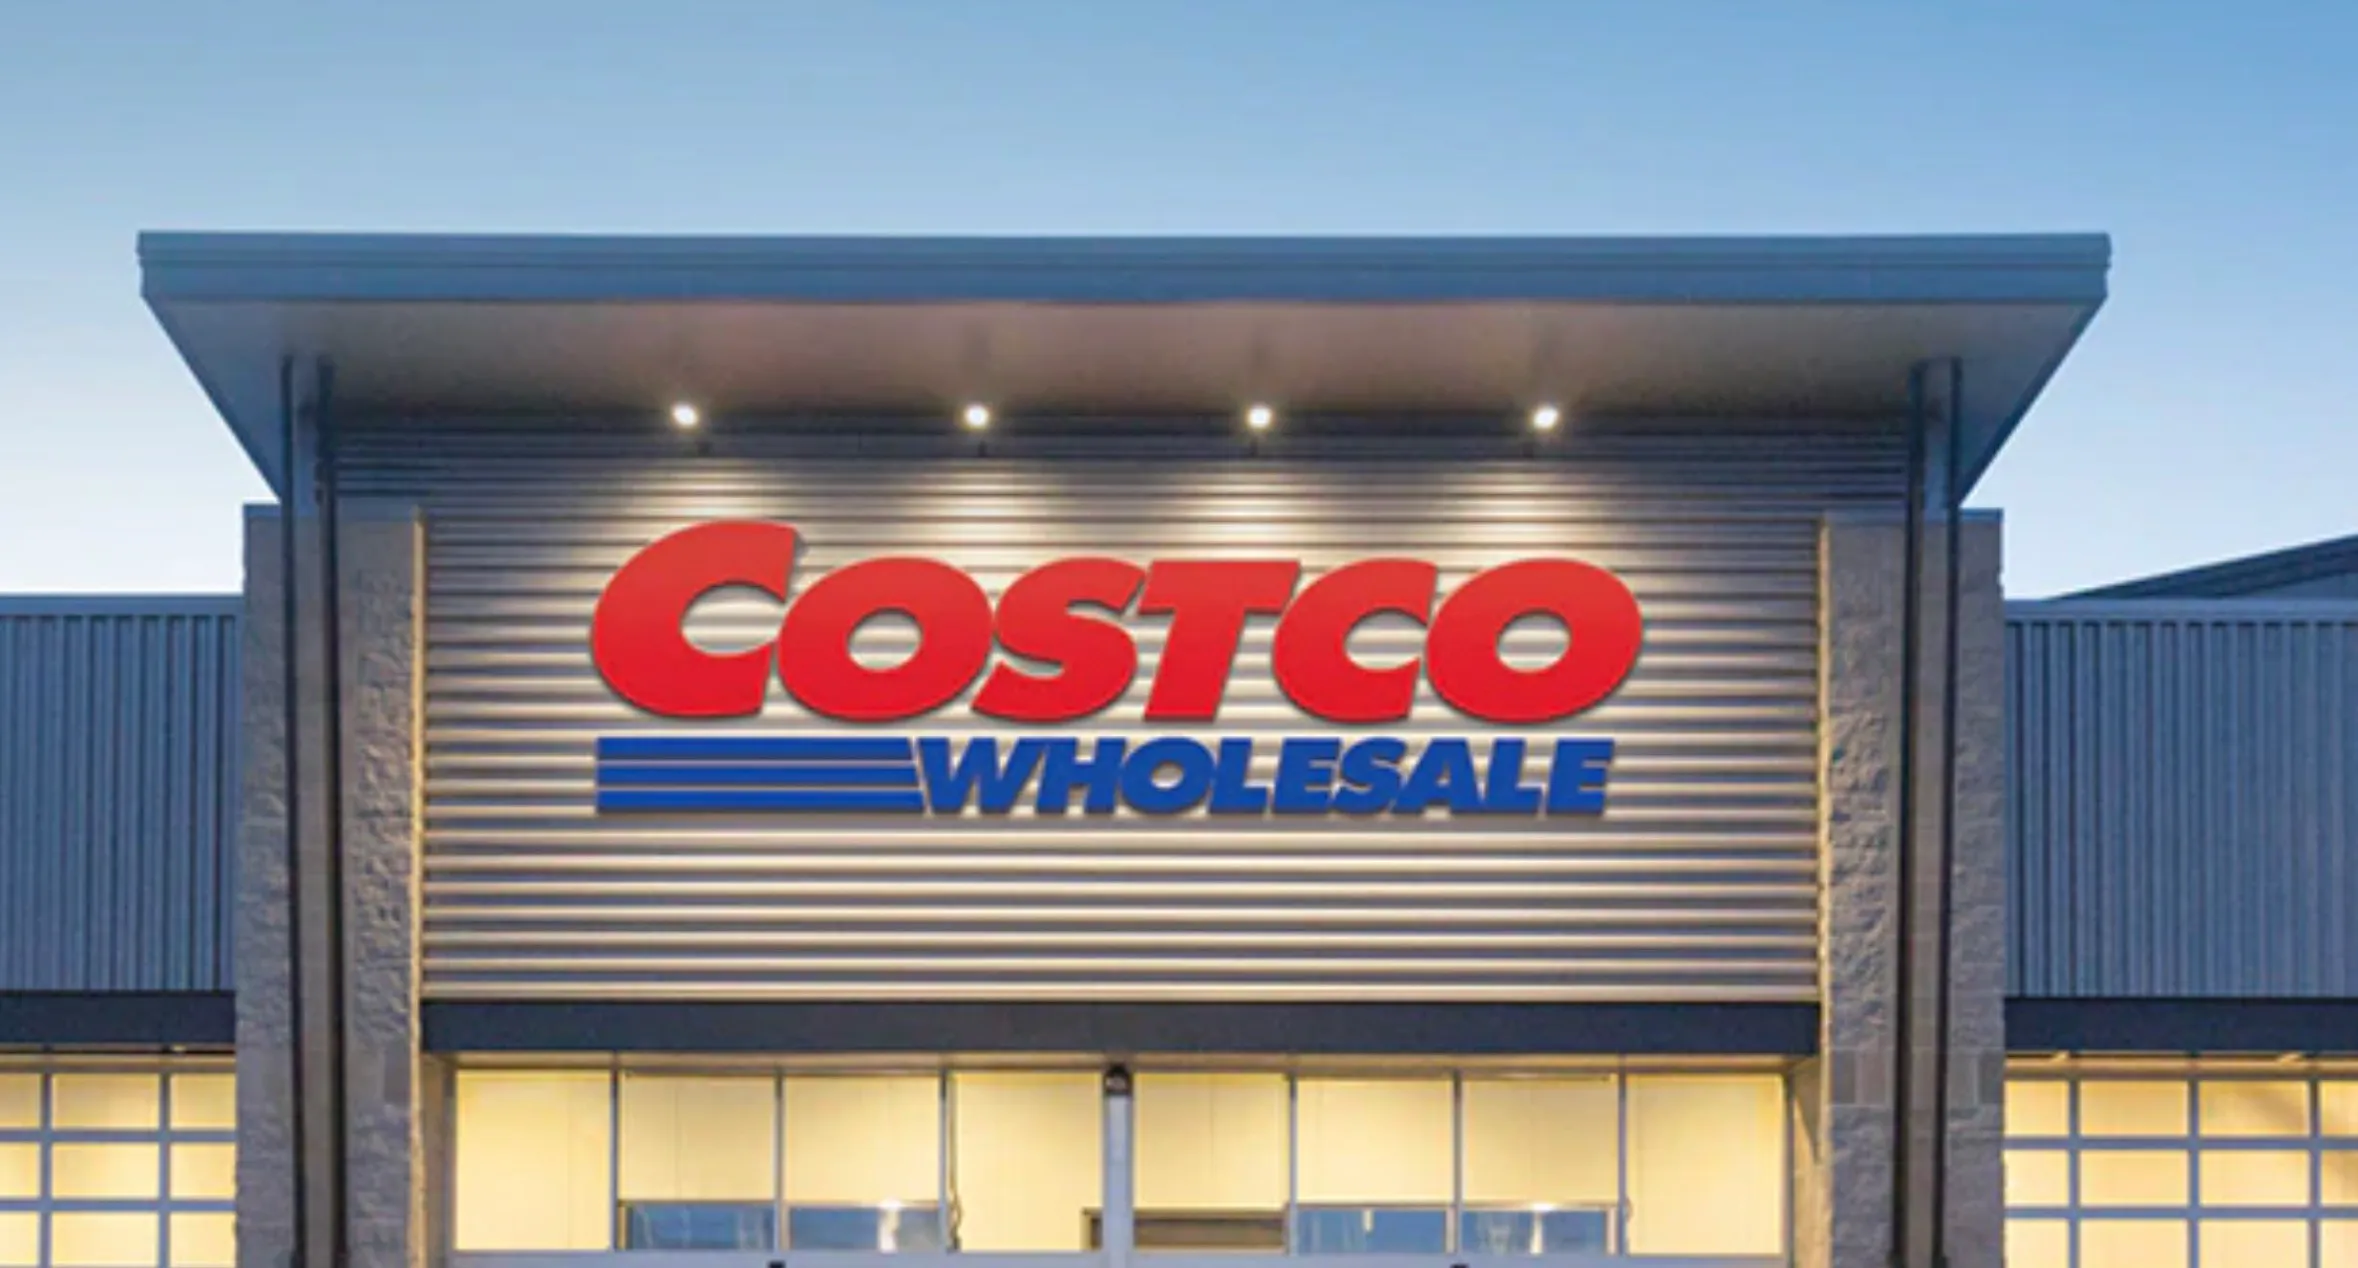 Costco Wholesale: Success Factors and Marketing Strategies